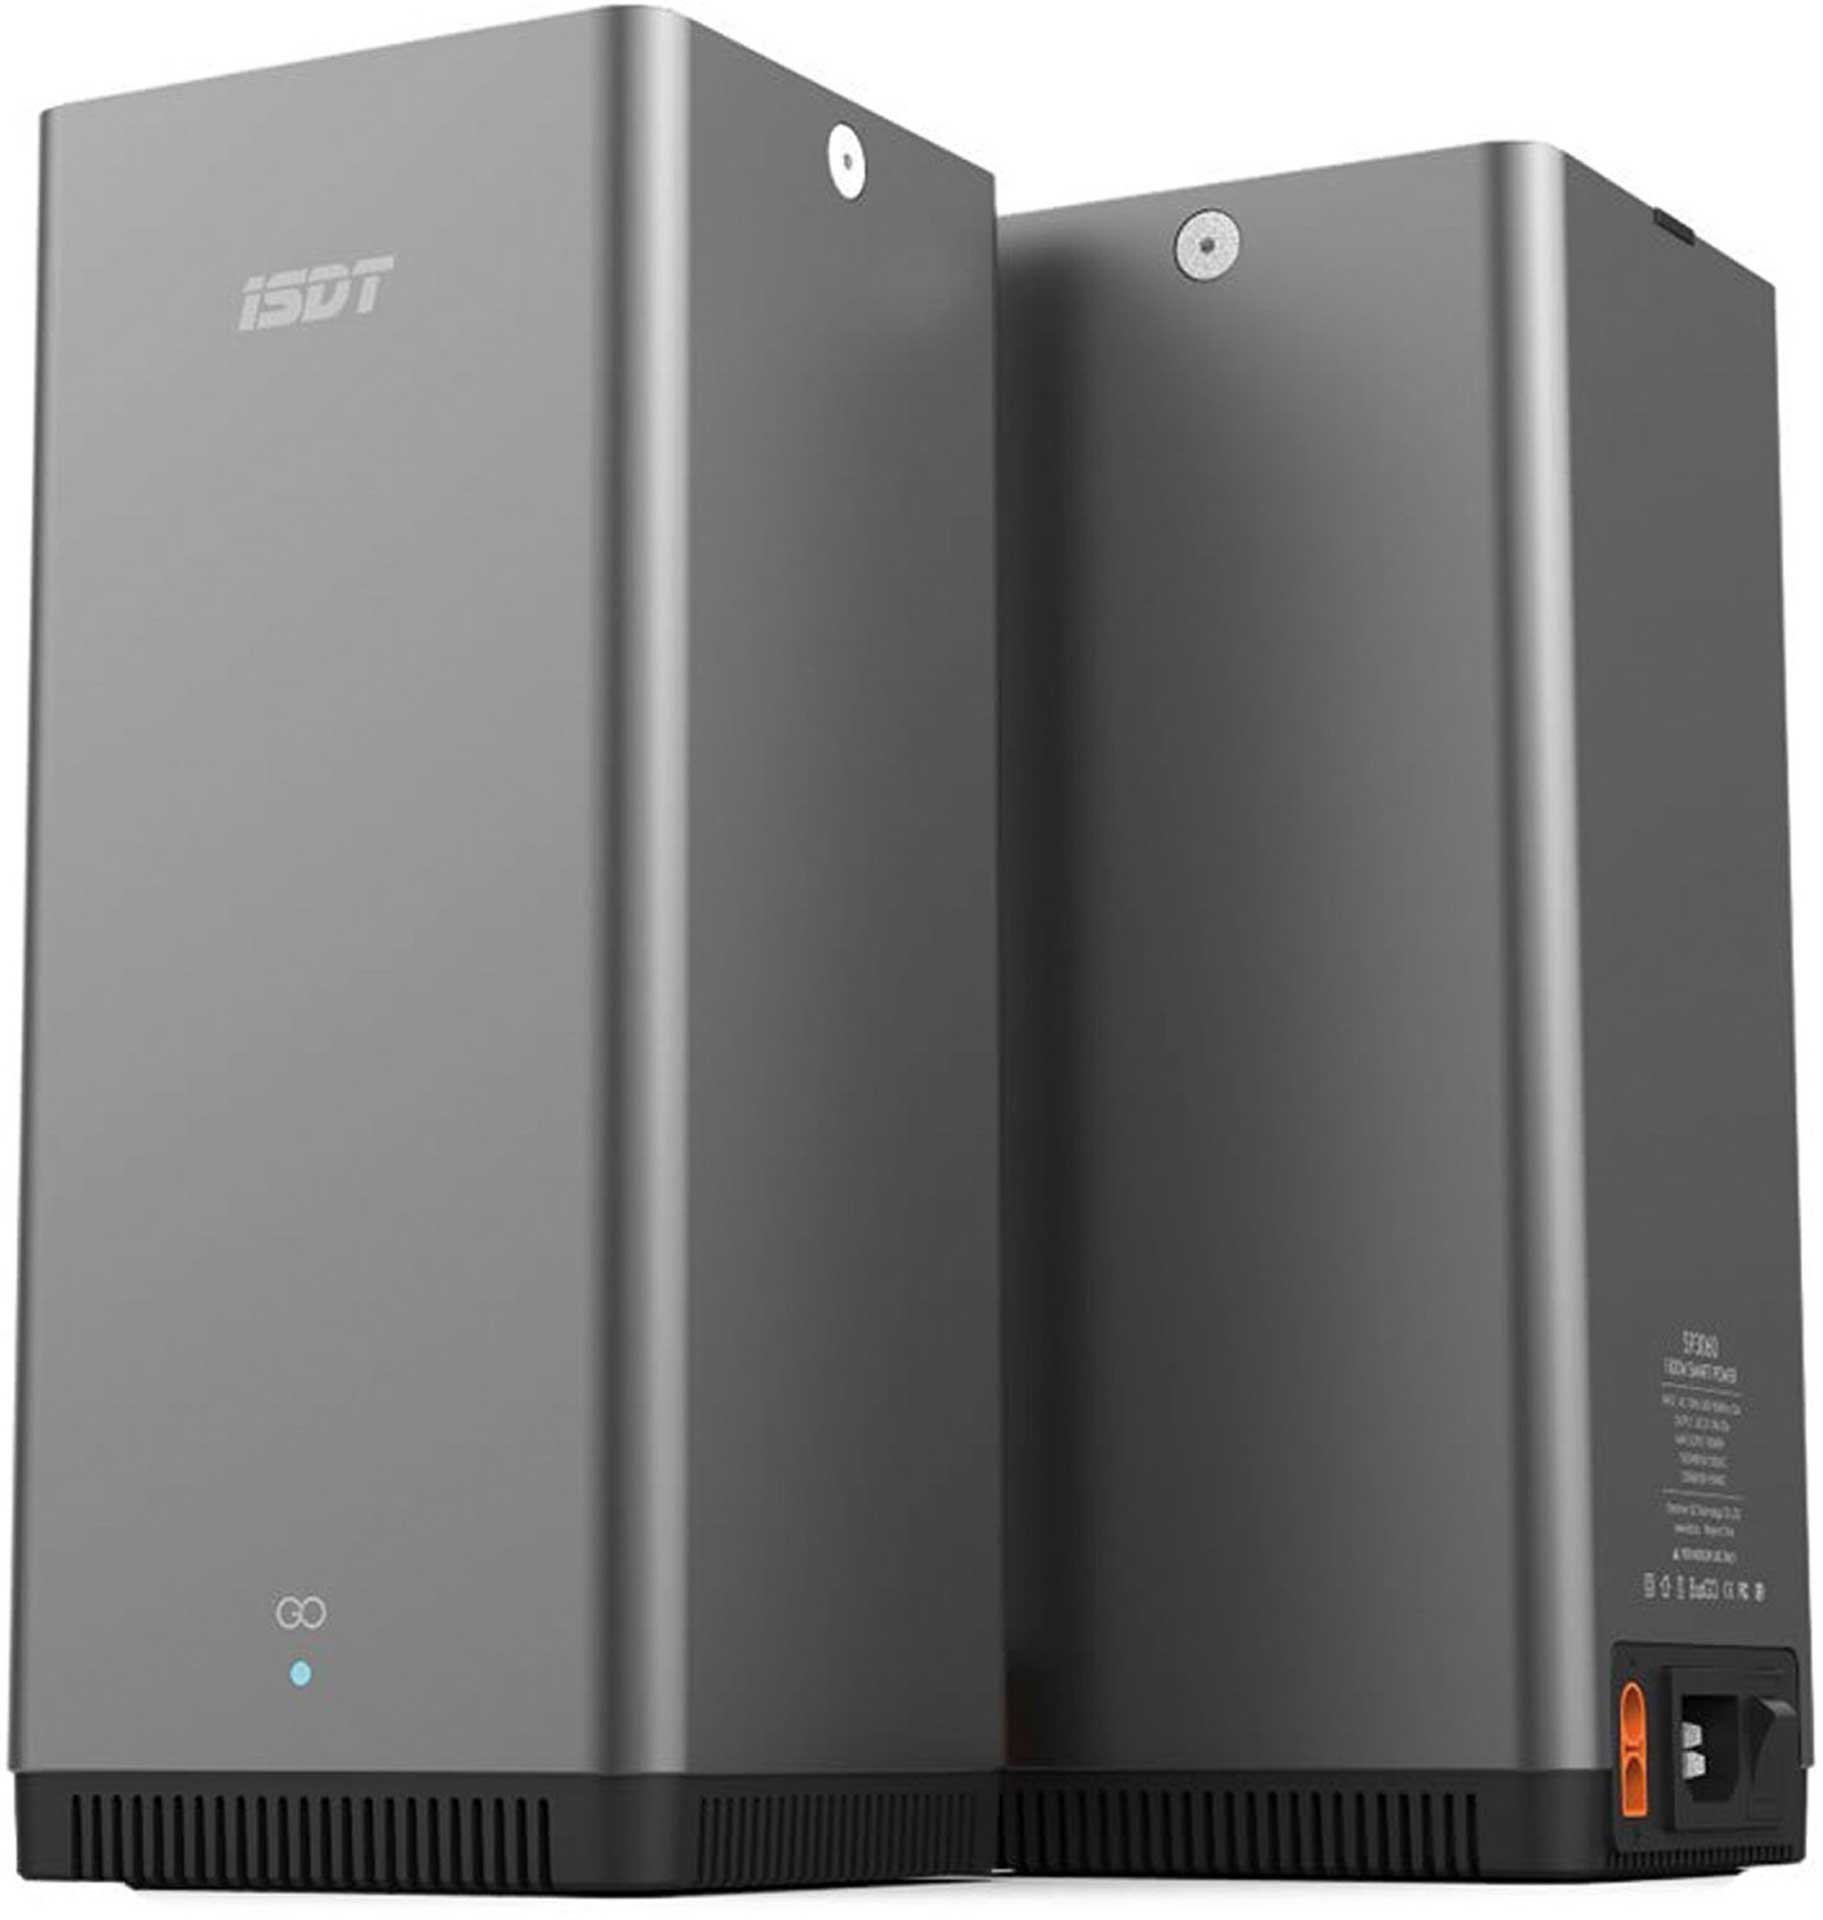 ISDT SP3050 Smart Power Power Supply 1800W with Battgo technology